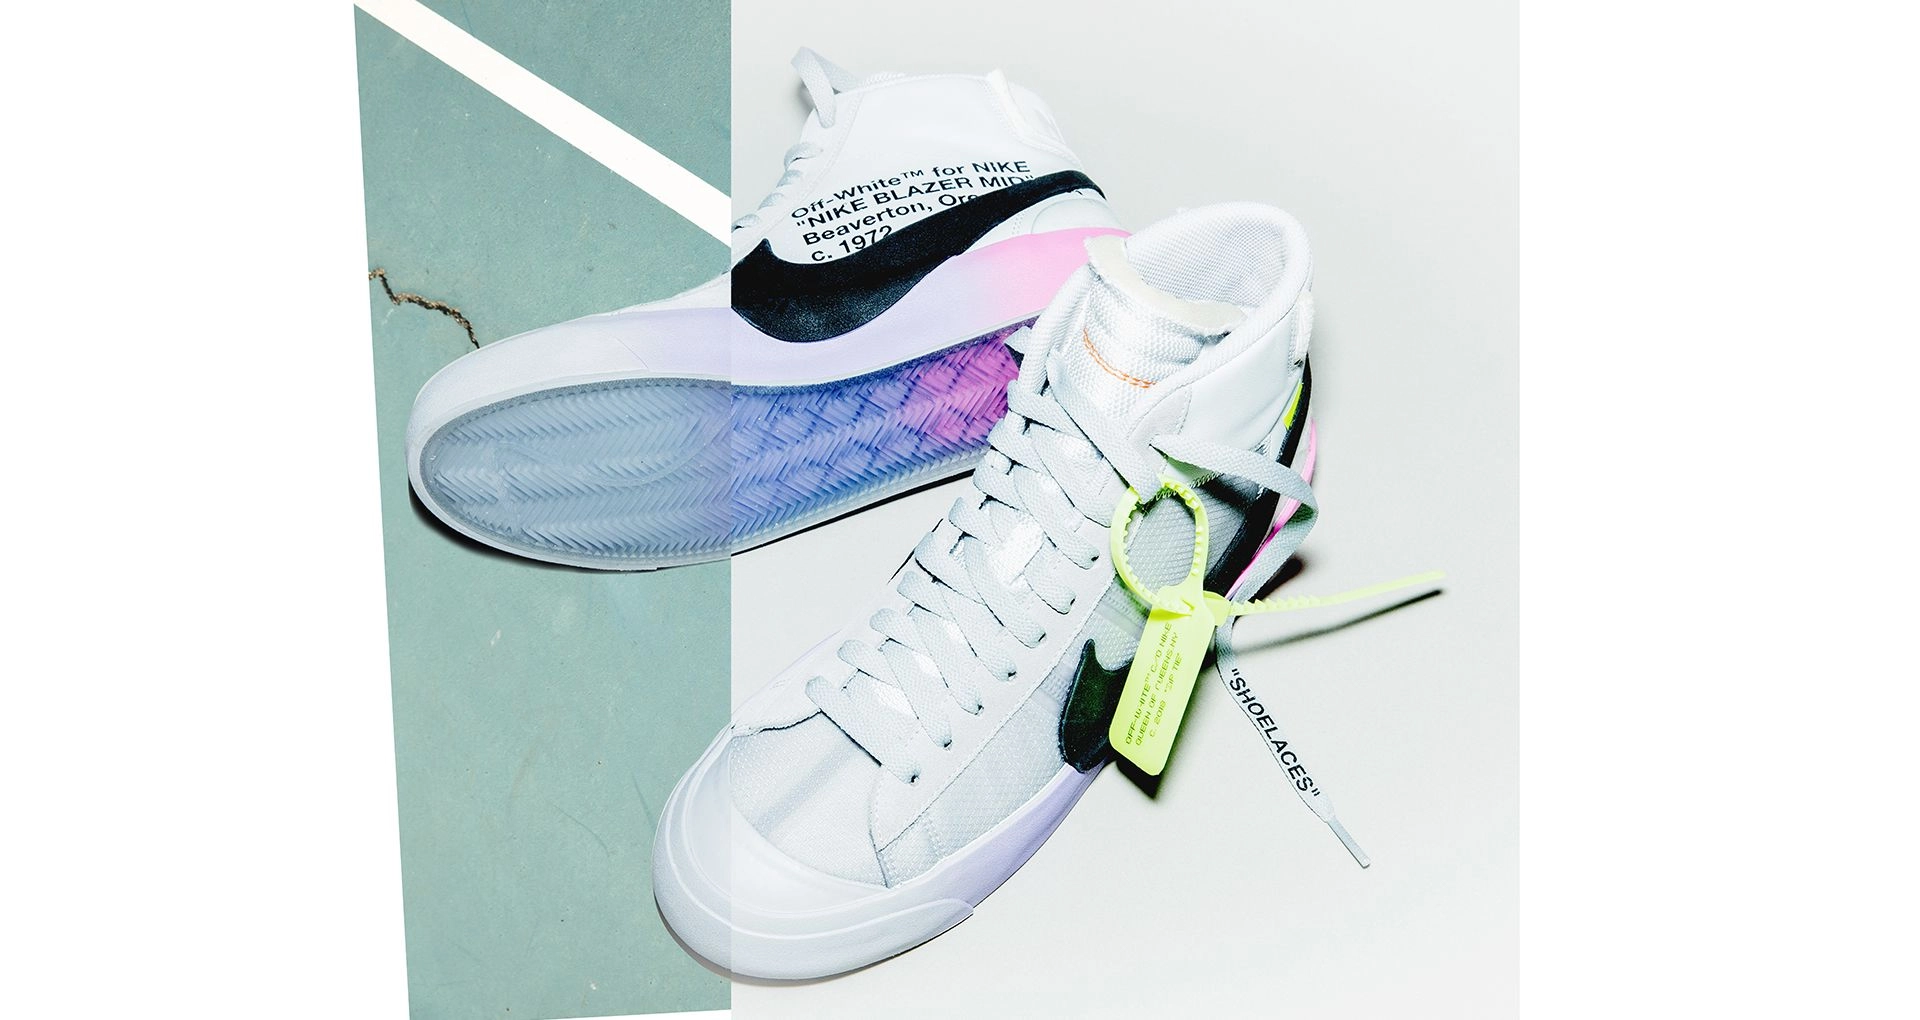 Off-White x Serena Williams x shox Nike Blazer “QUEEN”